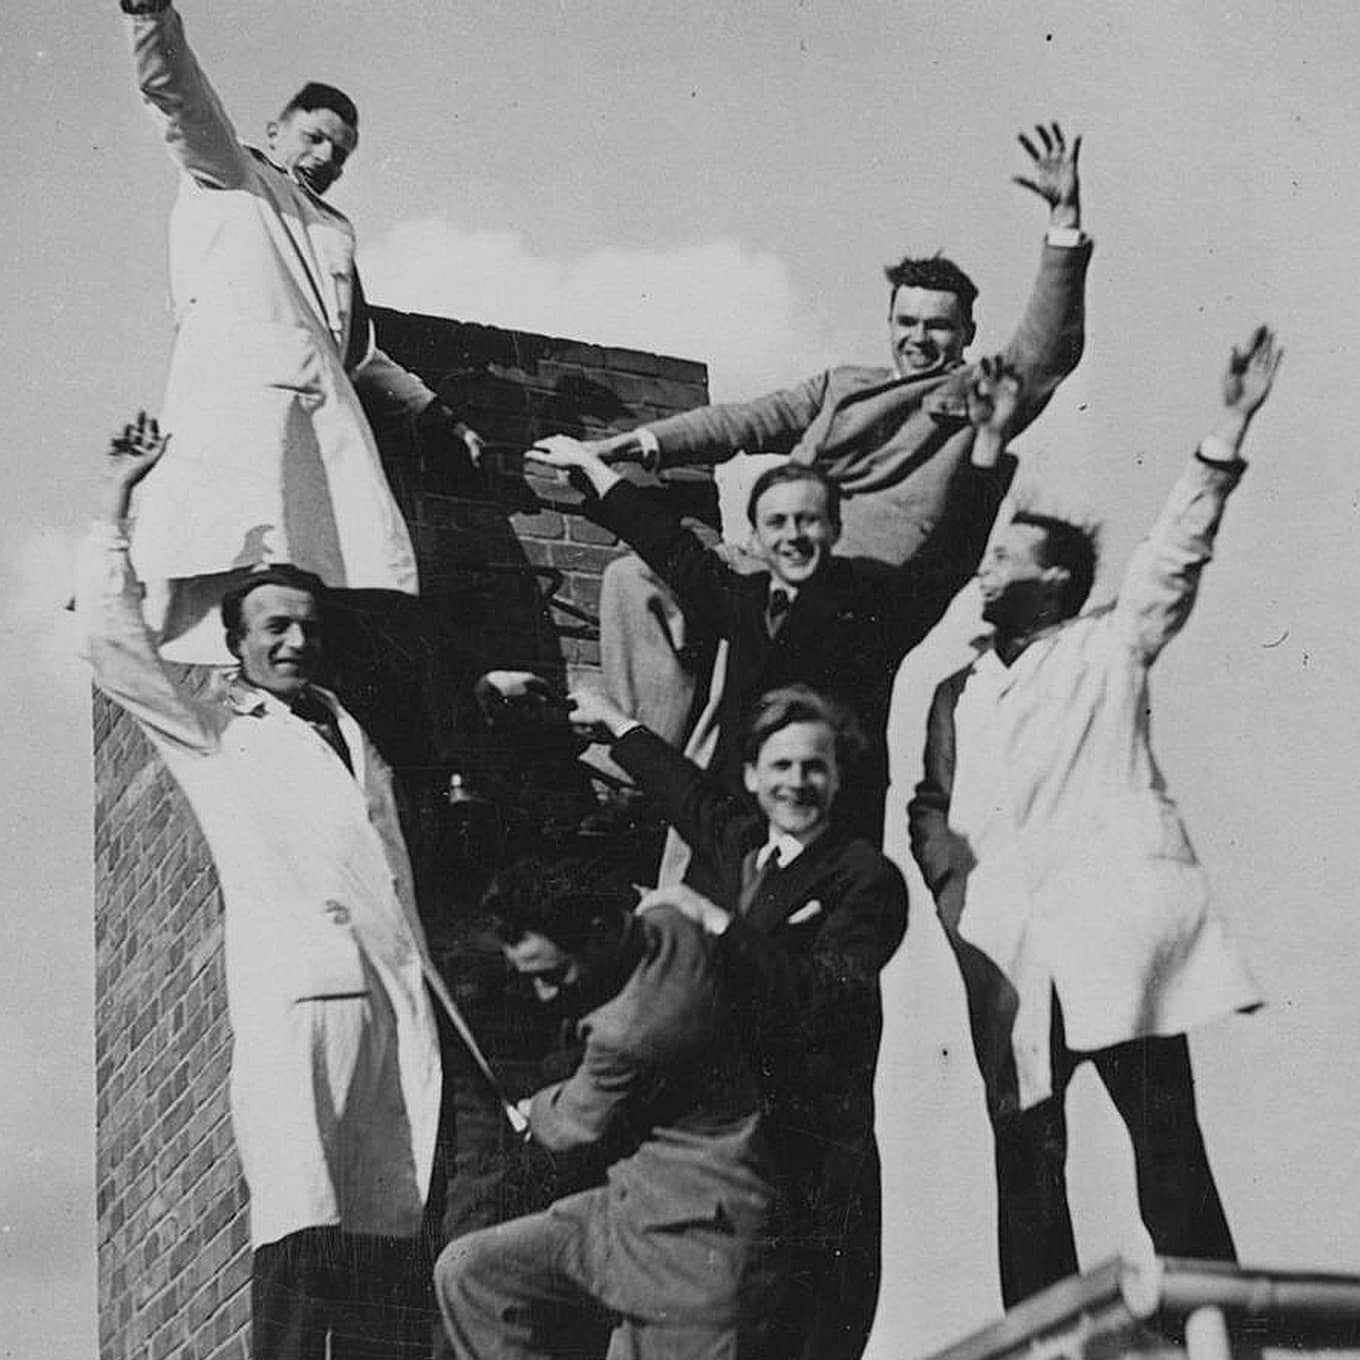 Ernst Neufert with colleagues from Itten School in Berlin 1931, Darmstadt